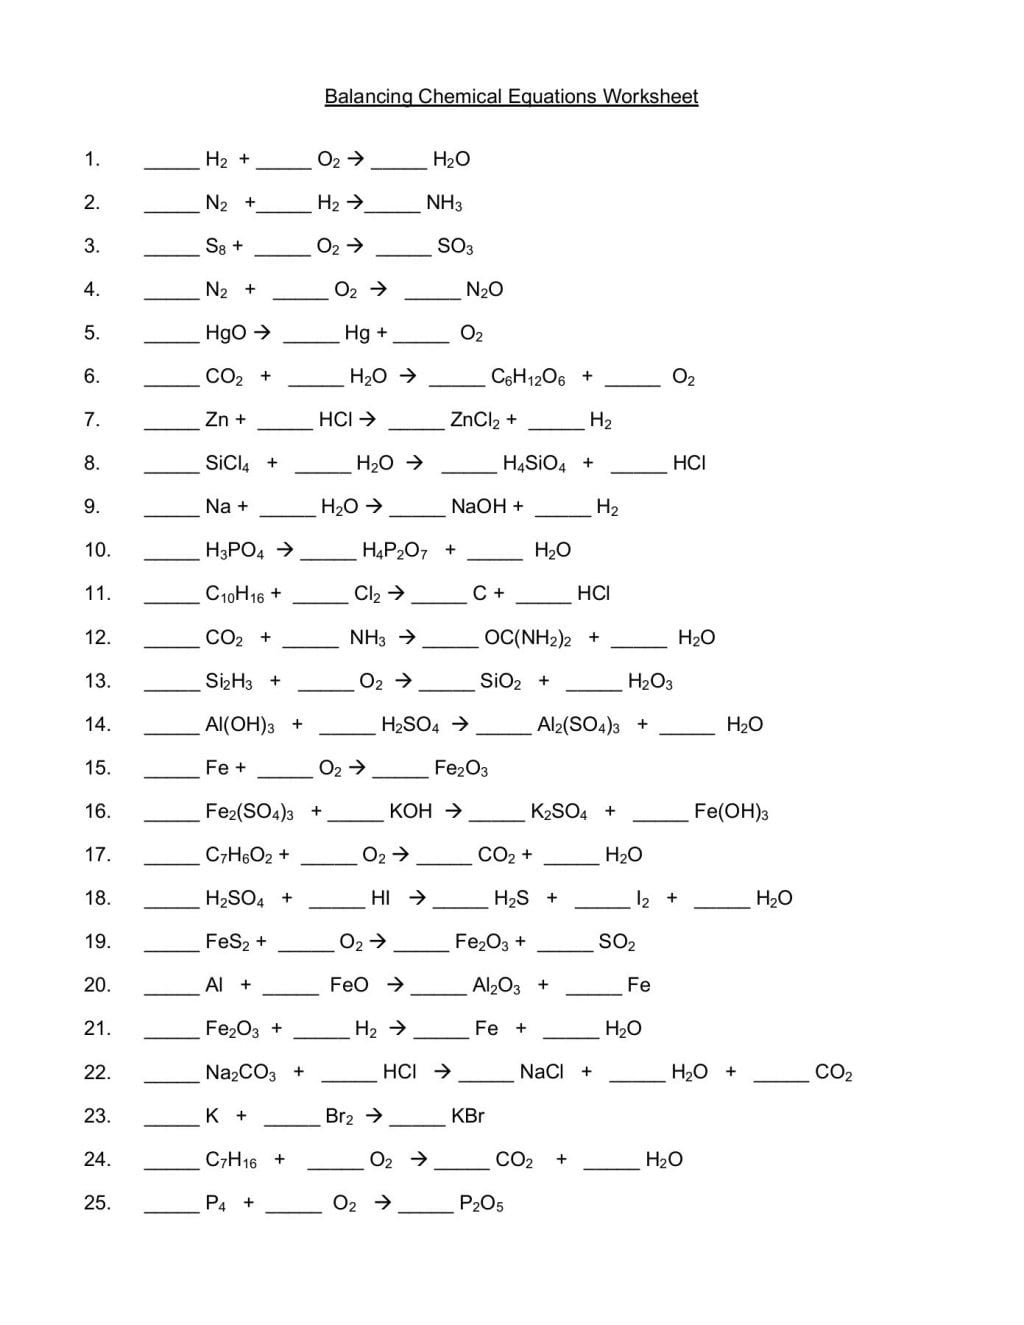 balancing-chemical-equations-worksheet-pdf-db-excel